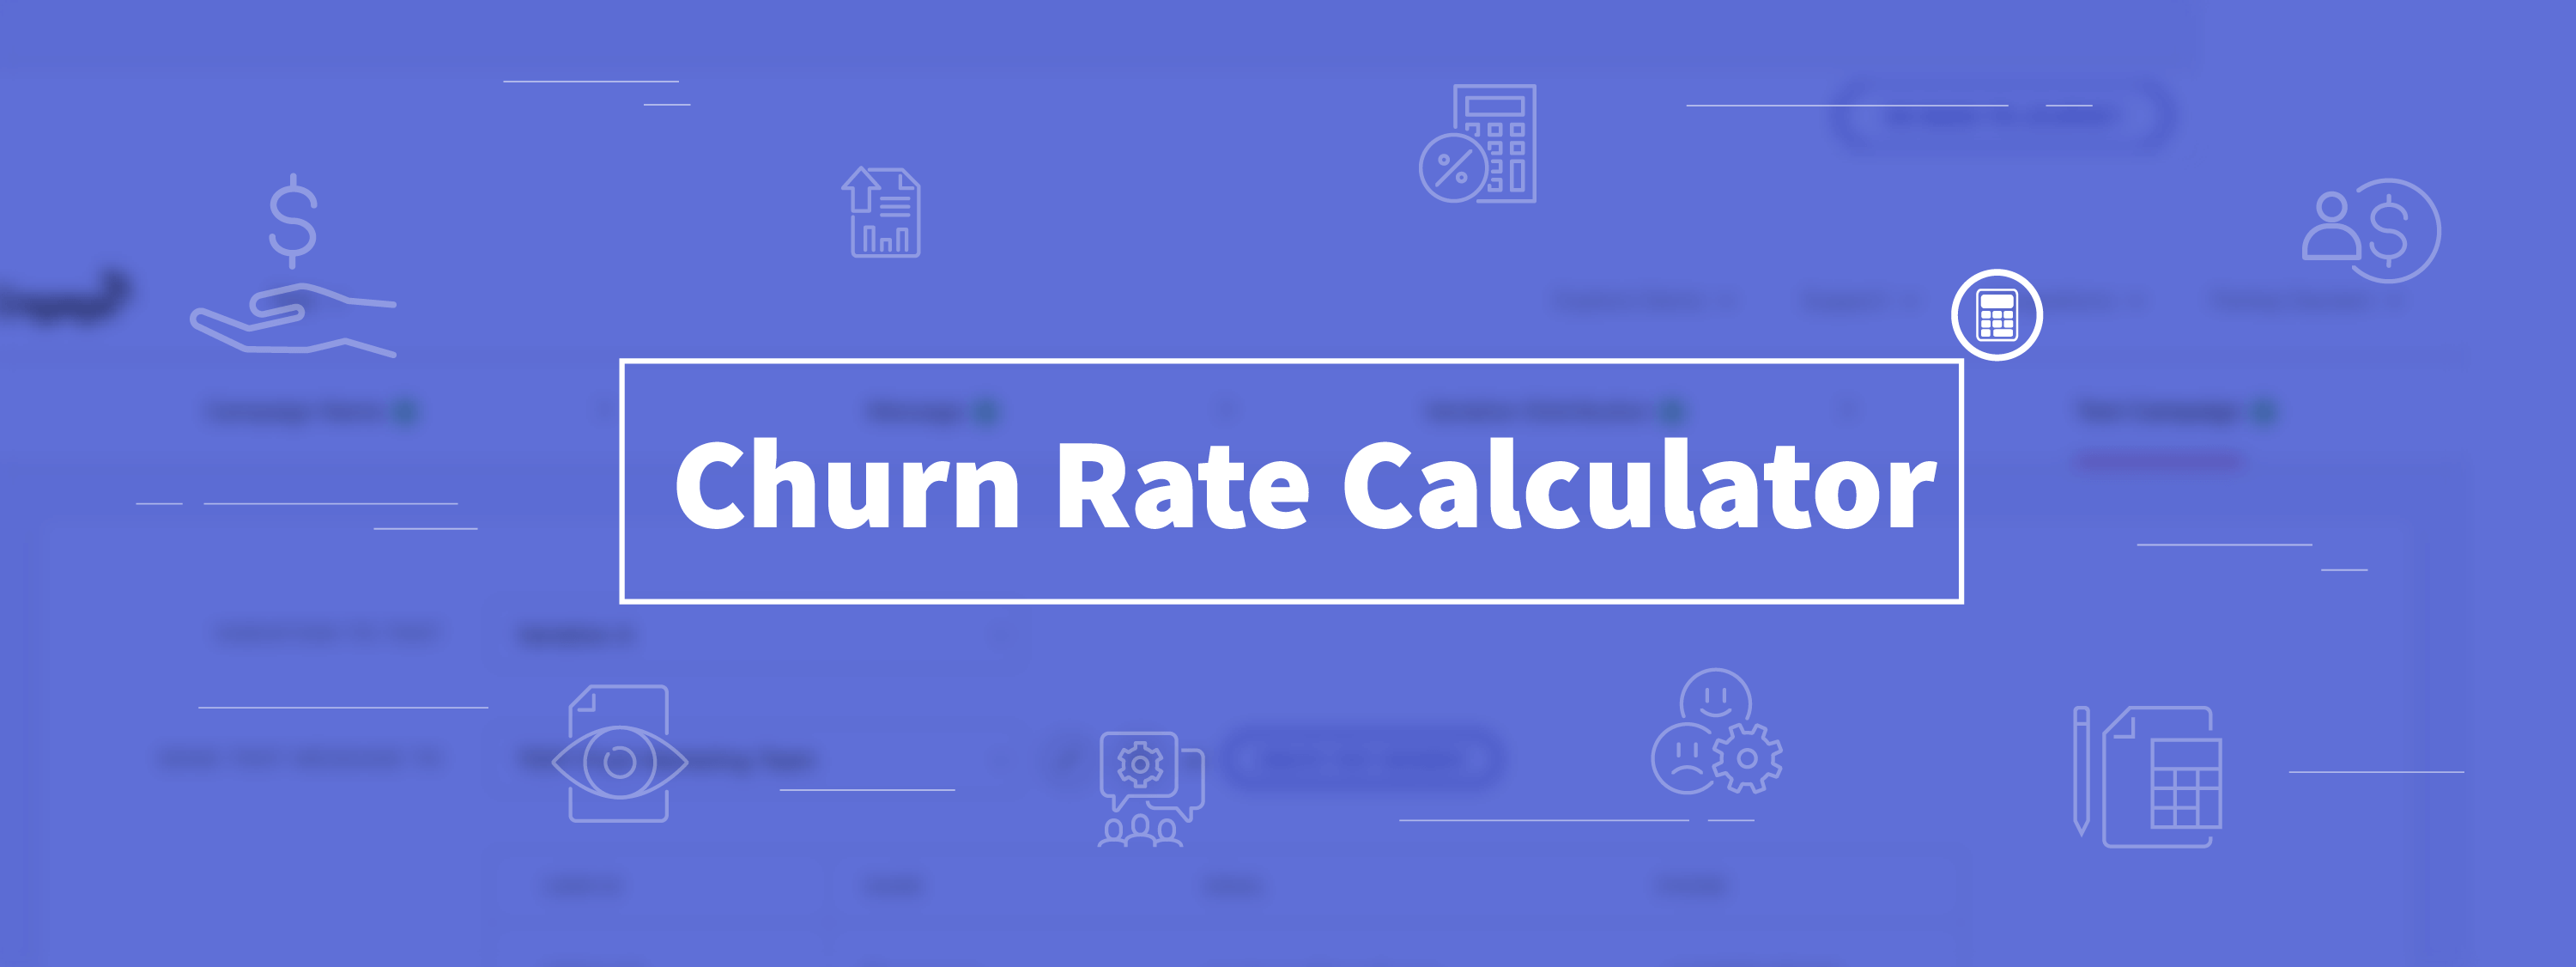 Churn Rate Calculator